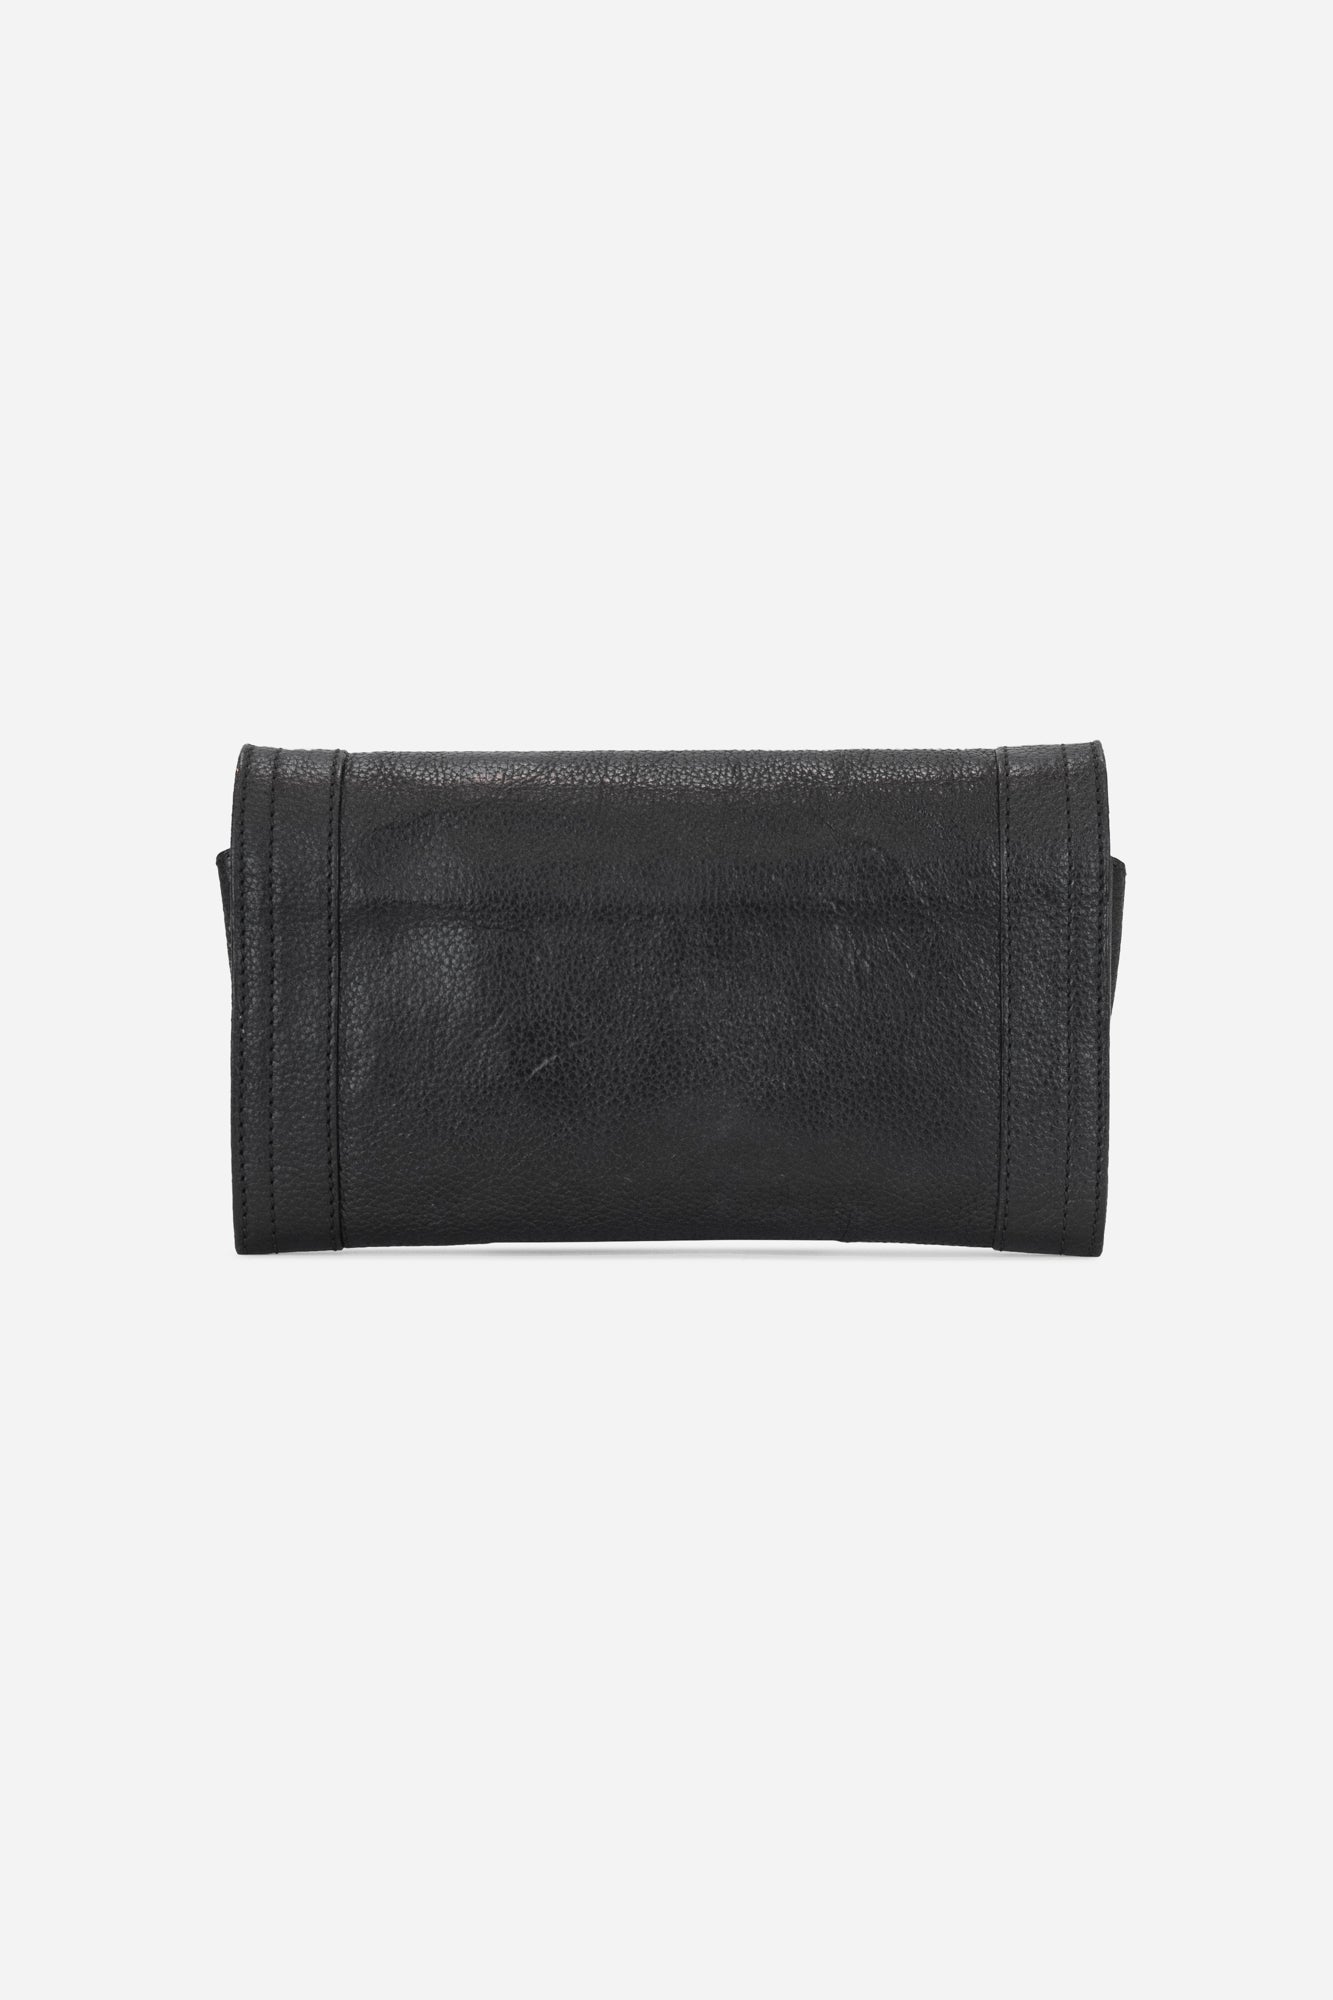 Black Leather Wallet Clutch Gold Logo